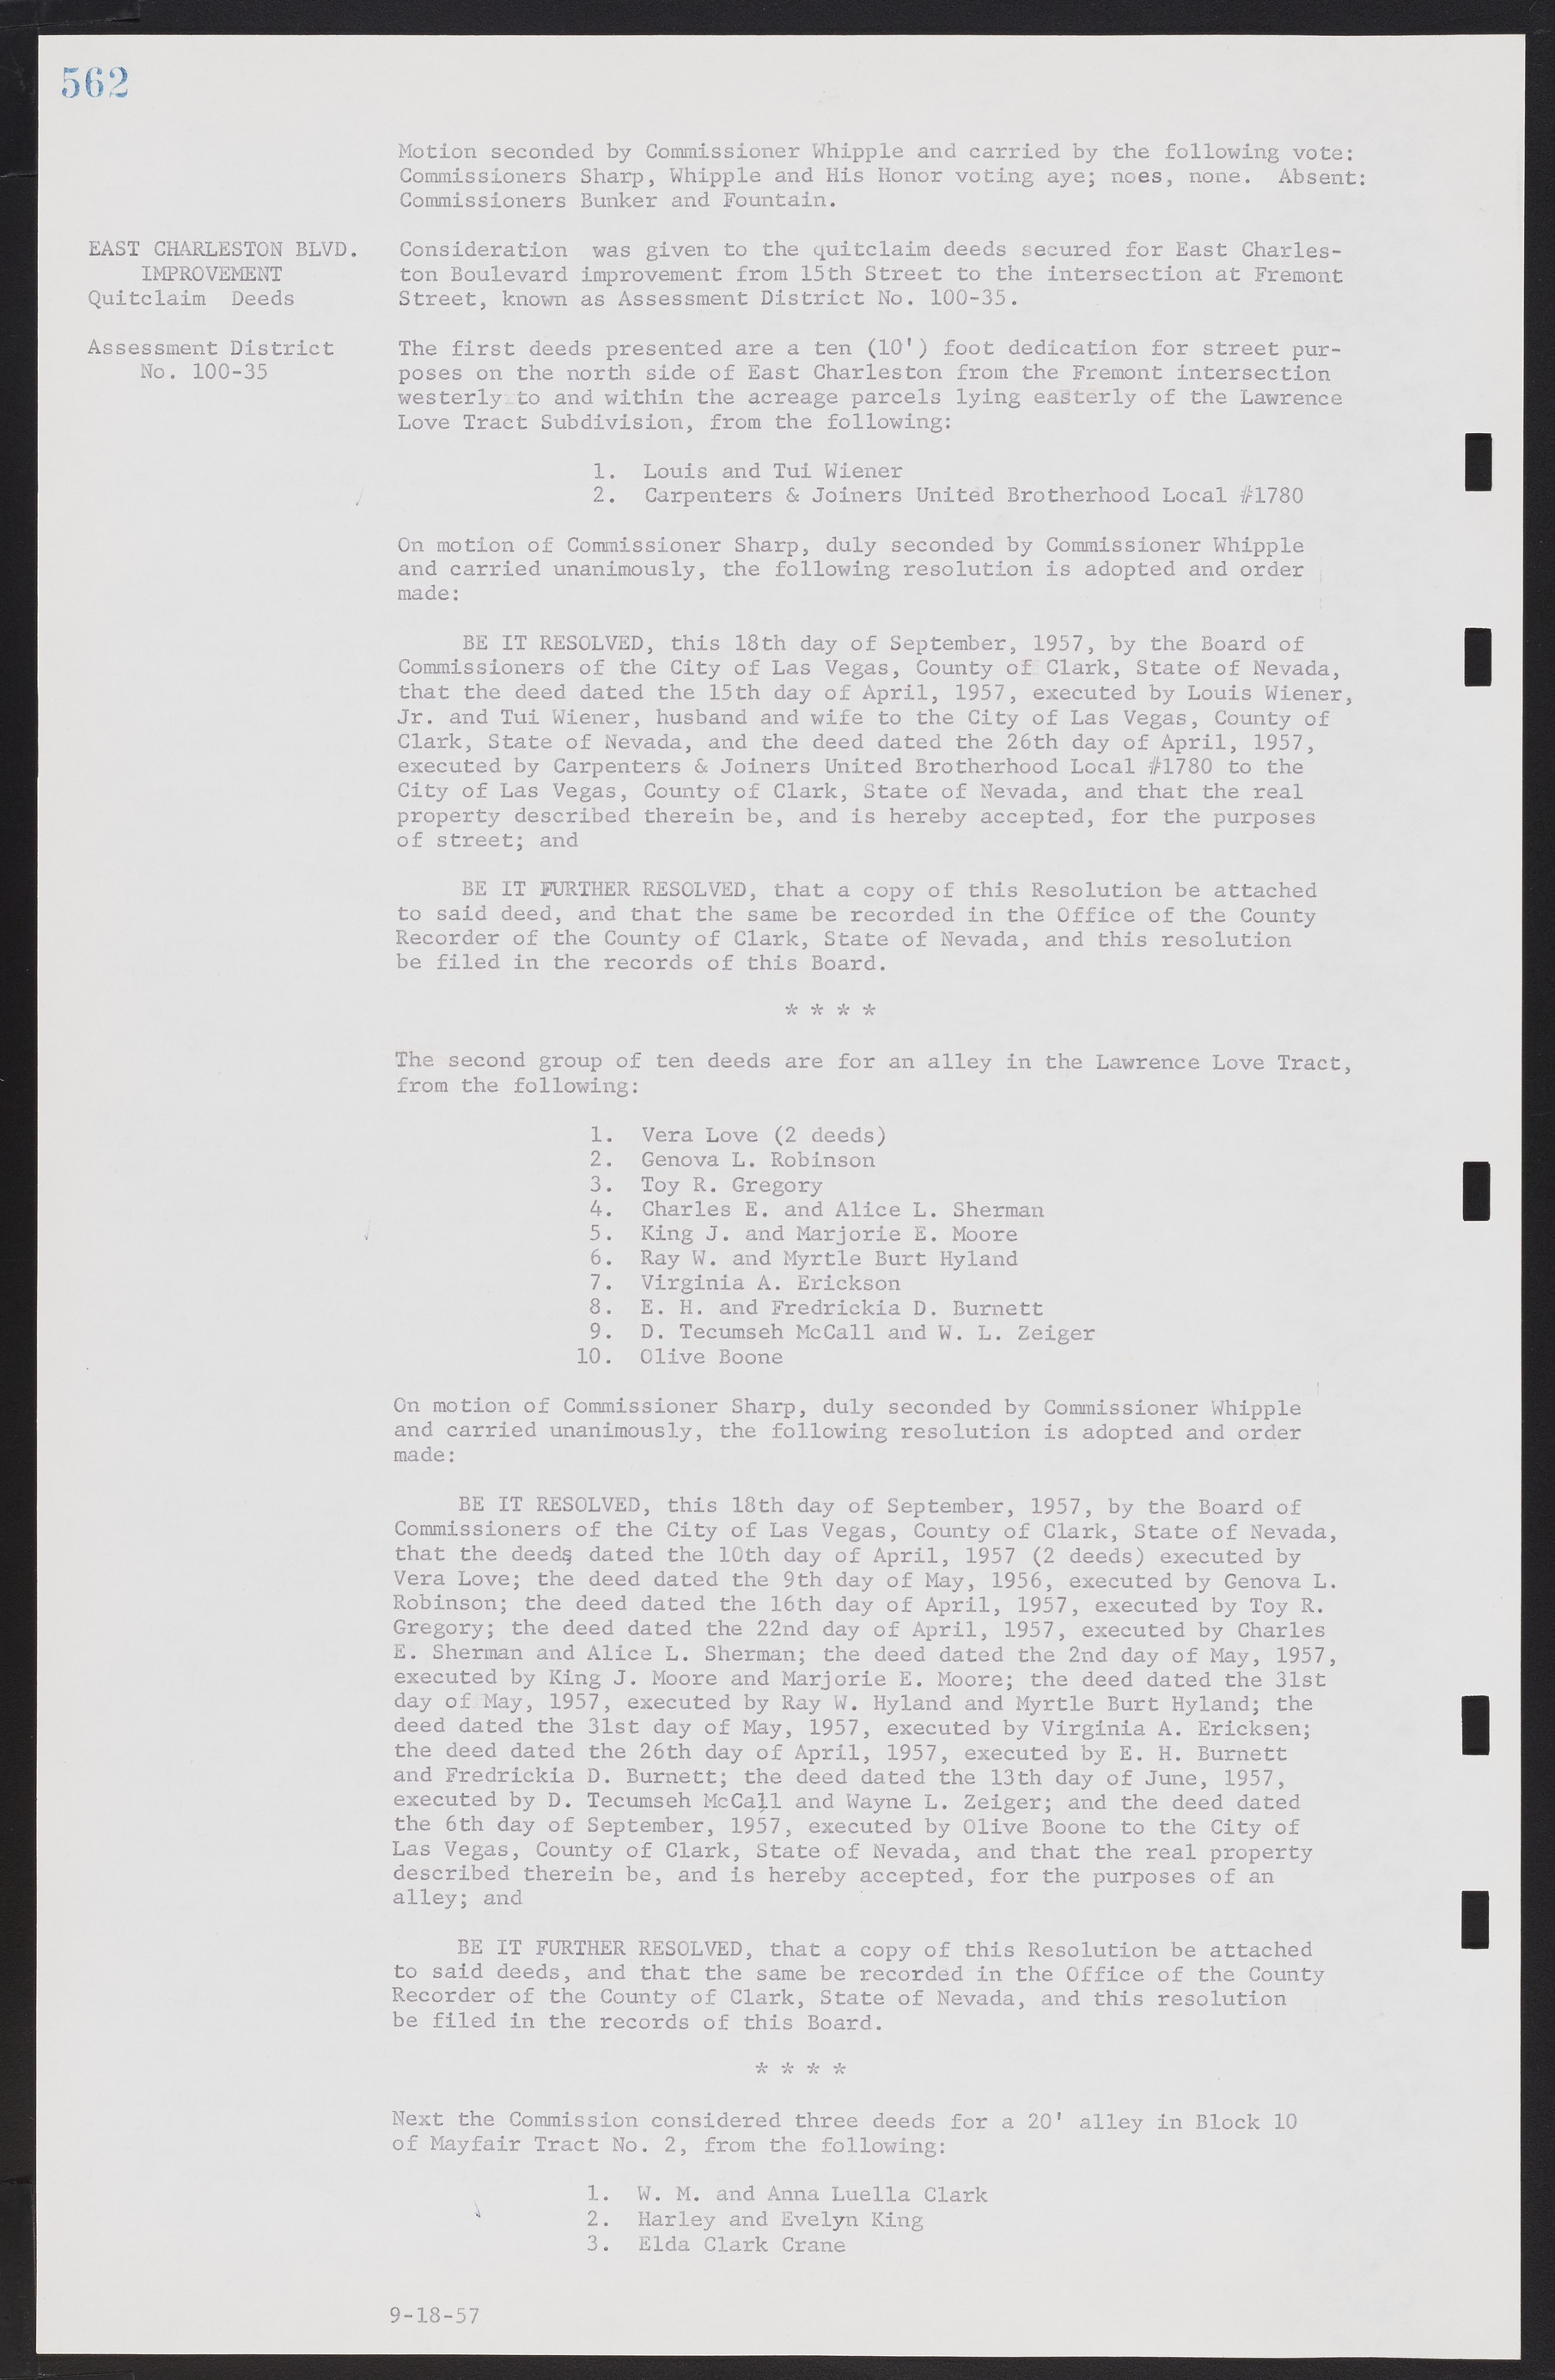 Las Vegas City Commission Minutes, September 21, 1955 to November 20, 1957, lvc000010-582